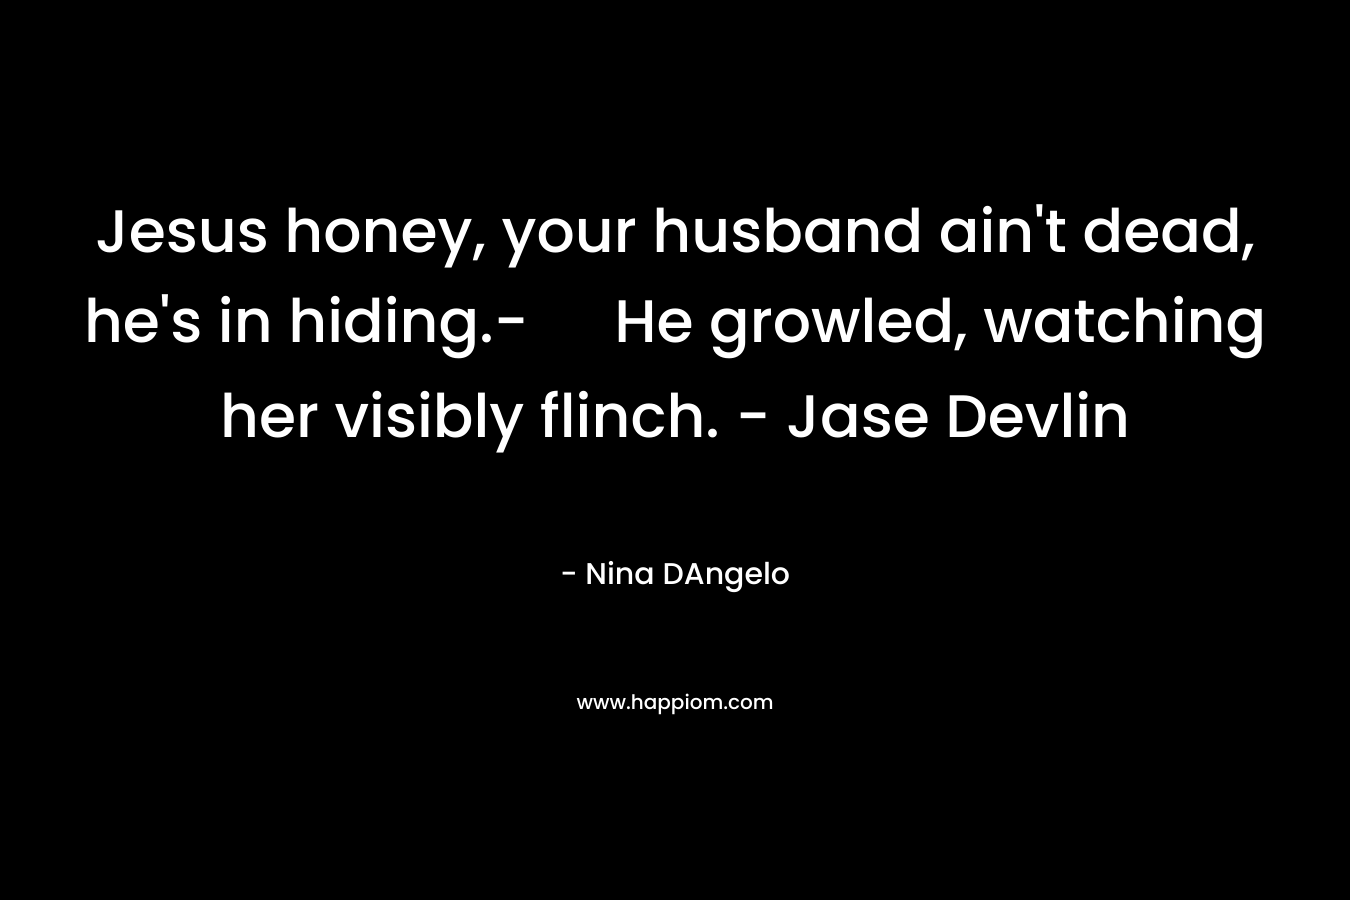 Jesus honey, your husband ain't dead, he's in hiding.- He growled, watching her visibly flinch. - Jase Devlin